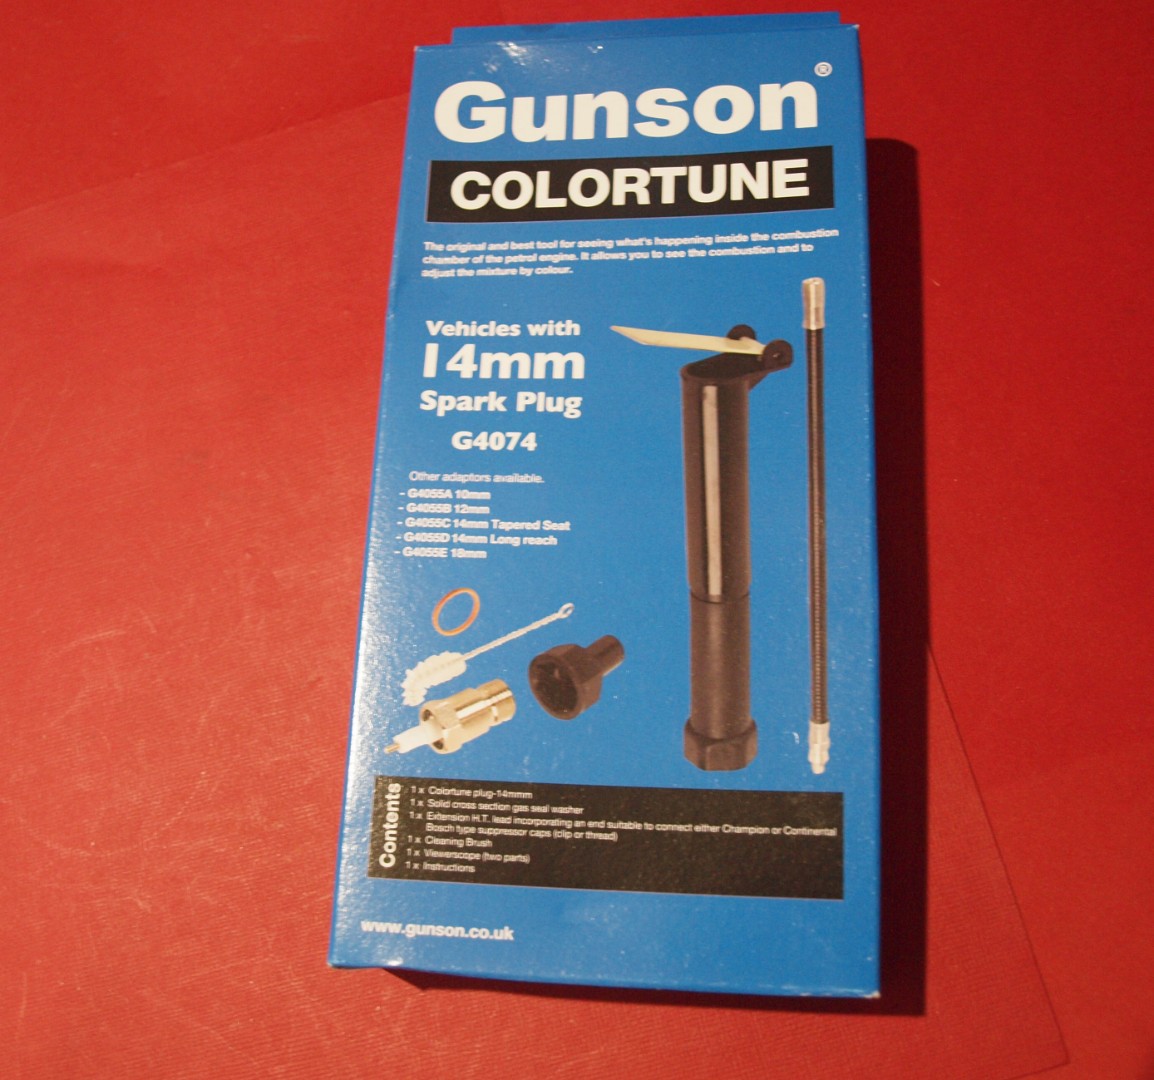 Gunson's Colortune carburettor tuning kit. (14mm Spark plug) MSA1002